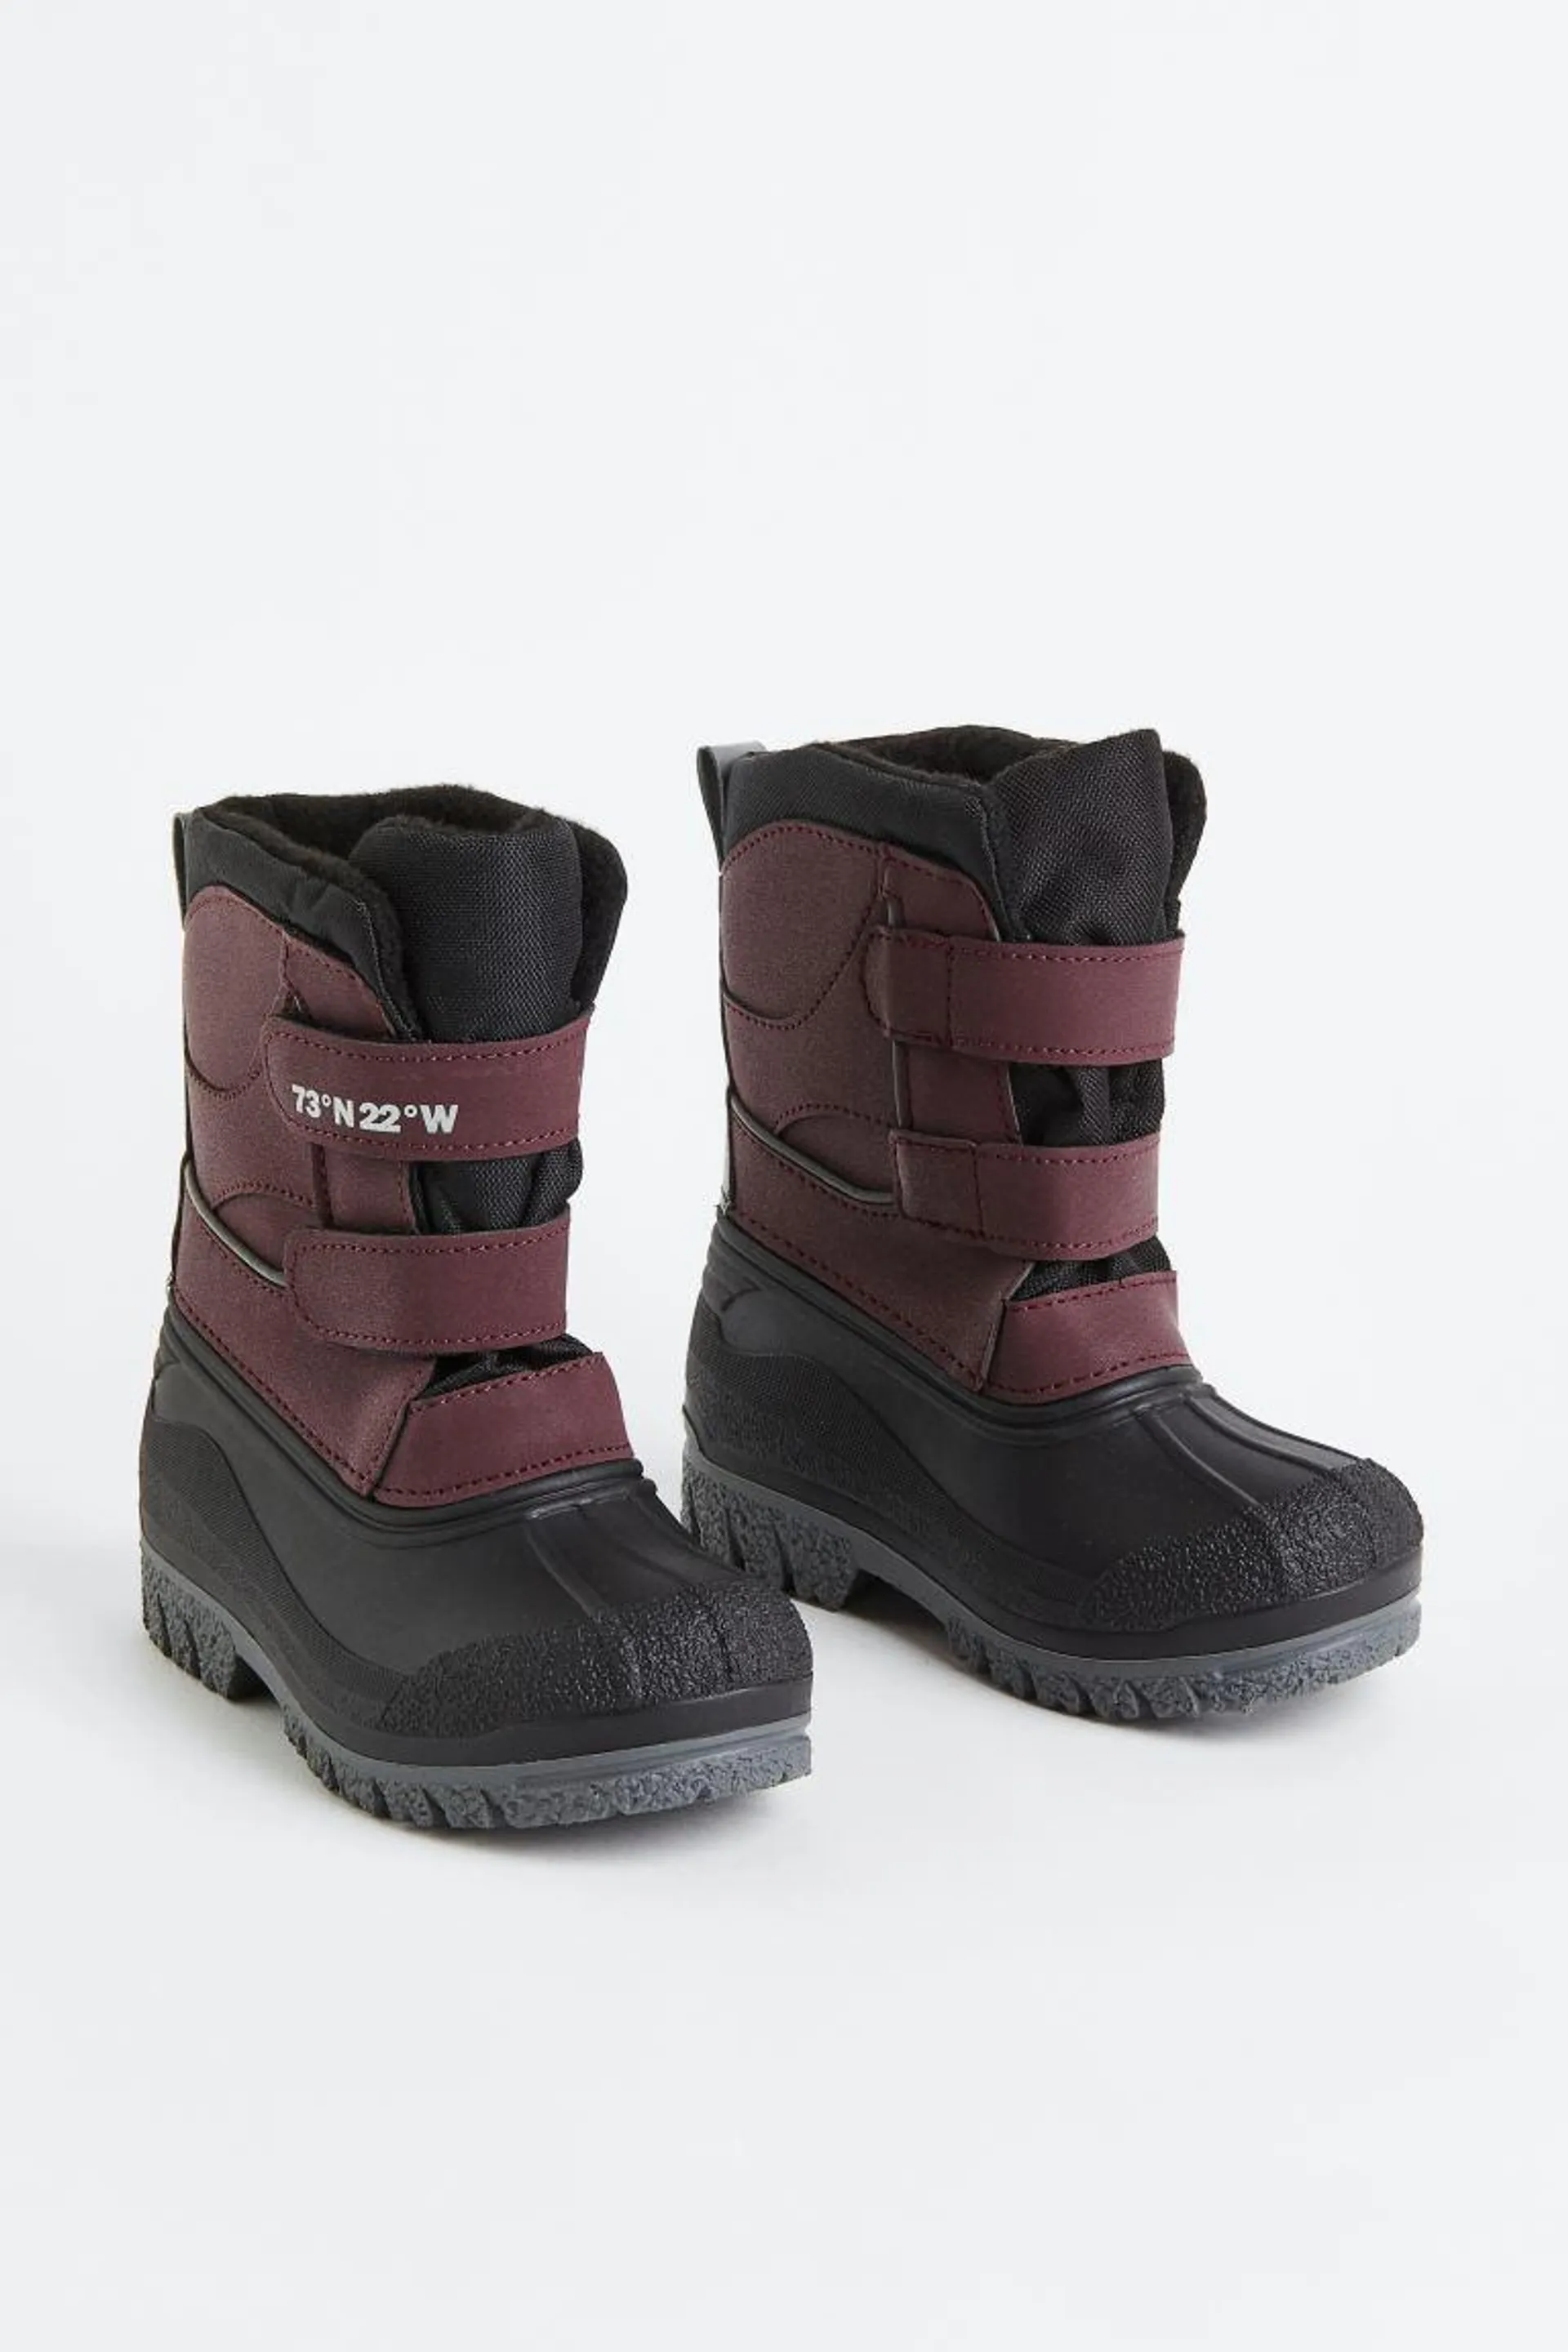 Waterproof winter boots